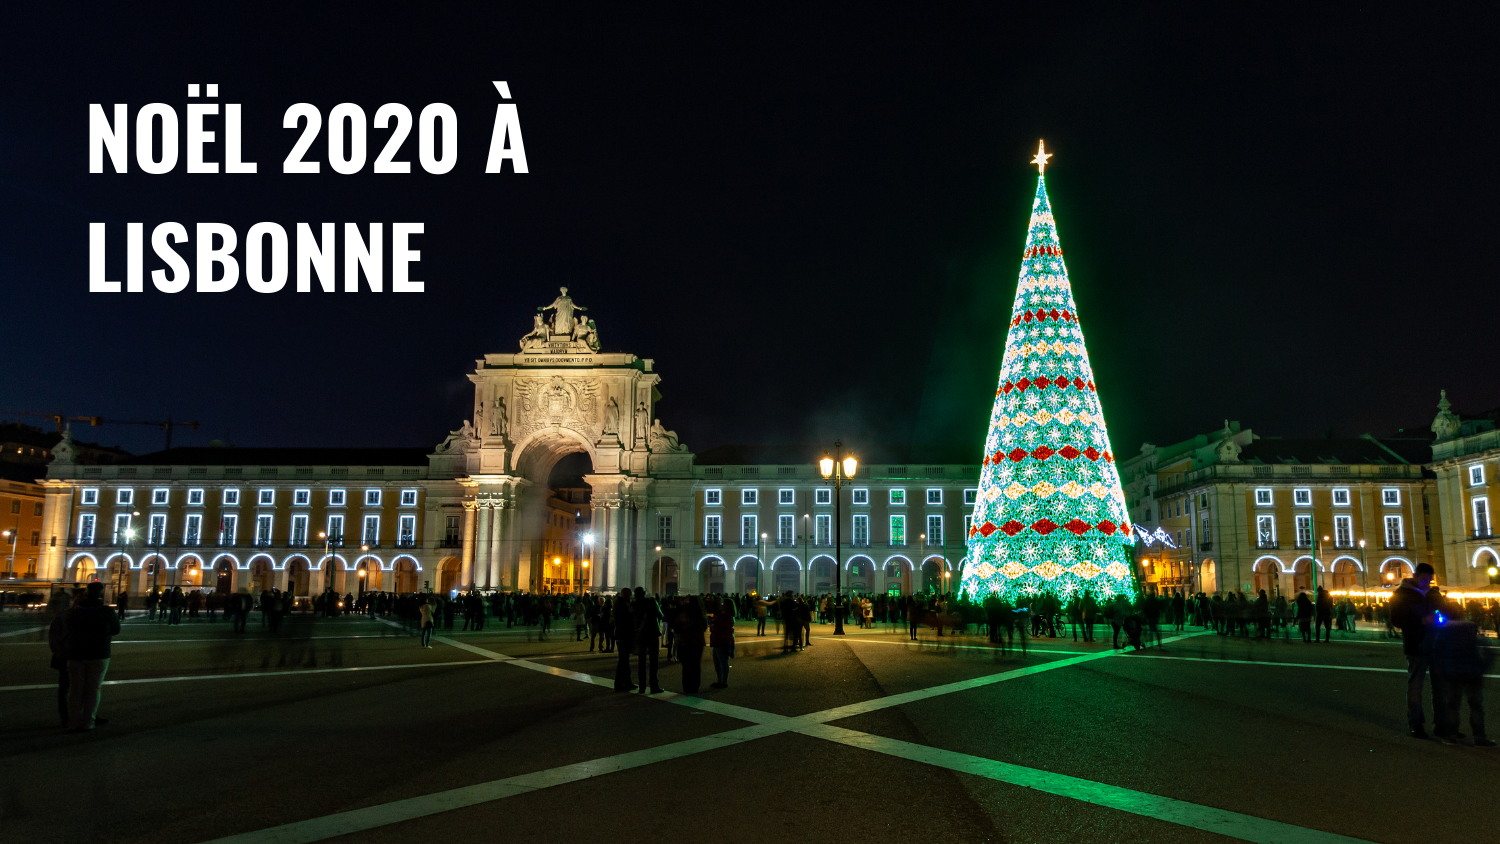 Noël 2020 à Lisbonne, Portugal